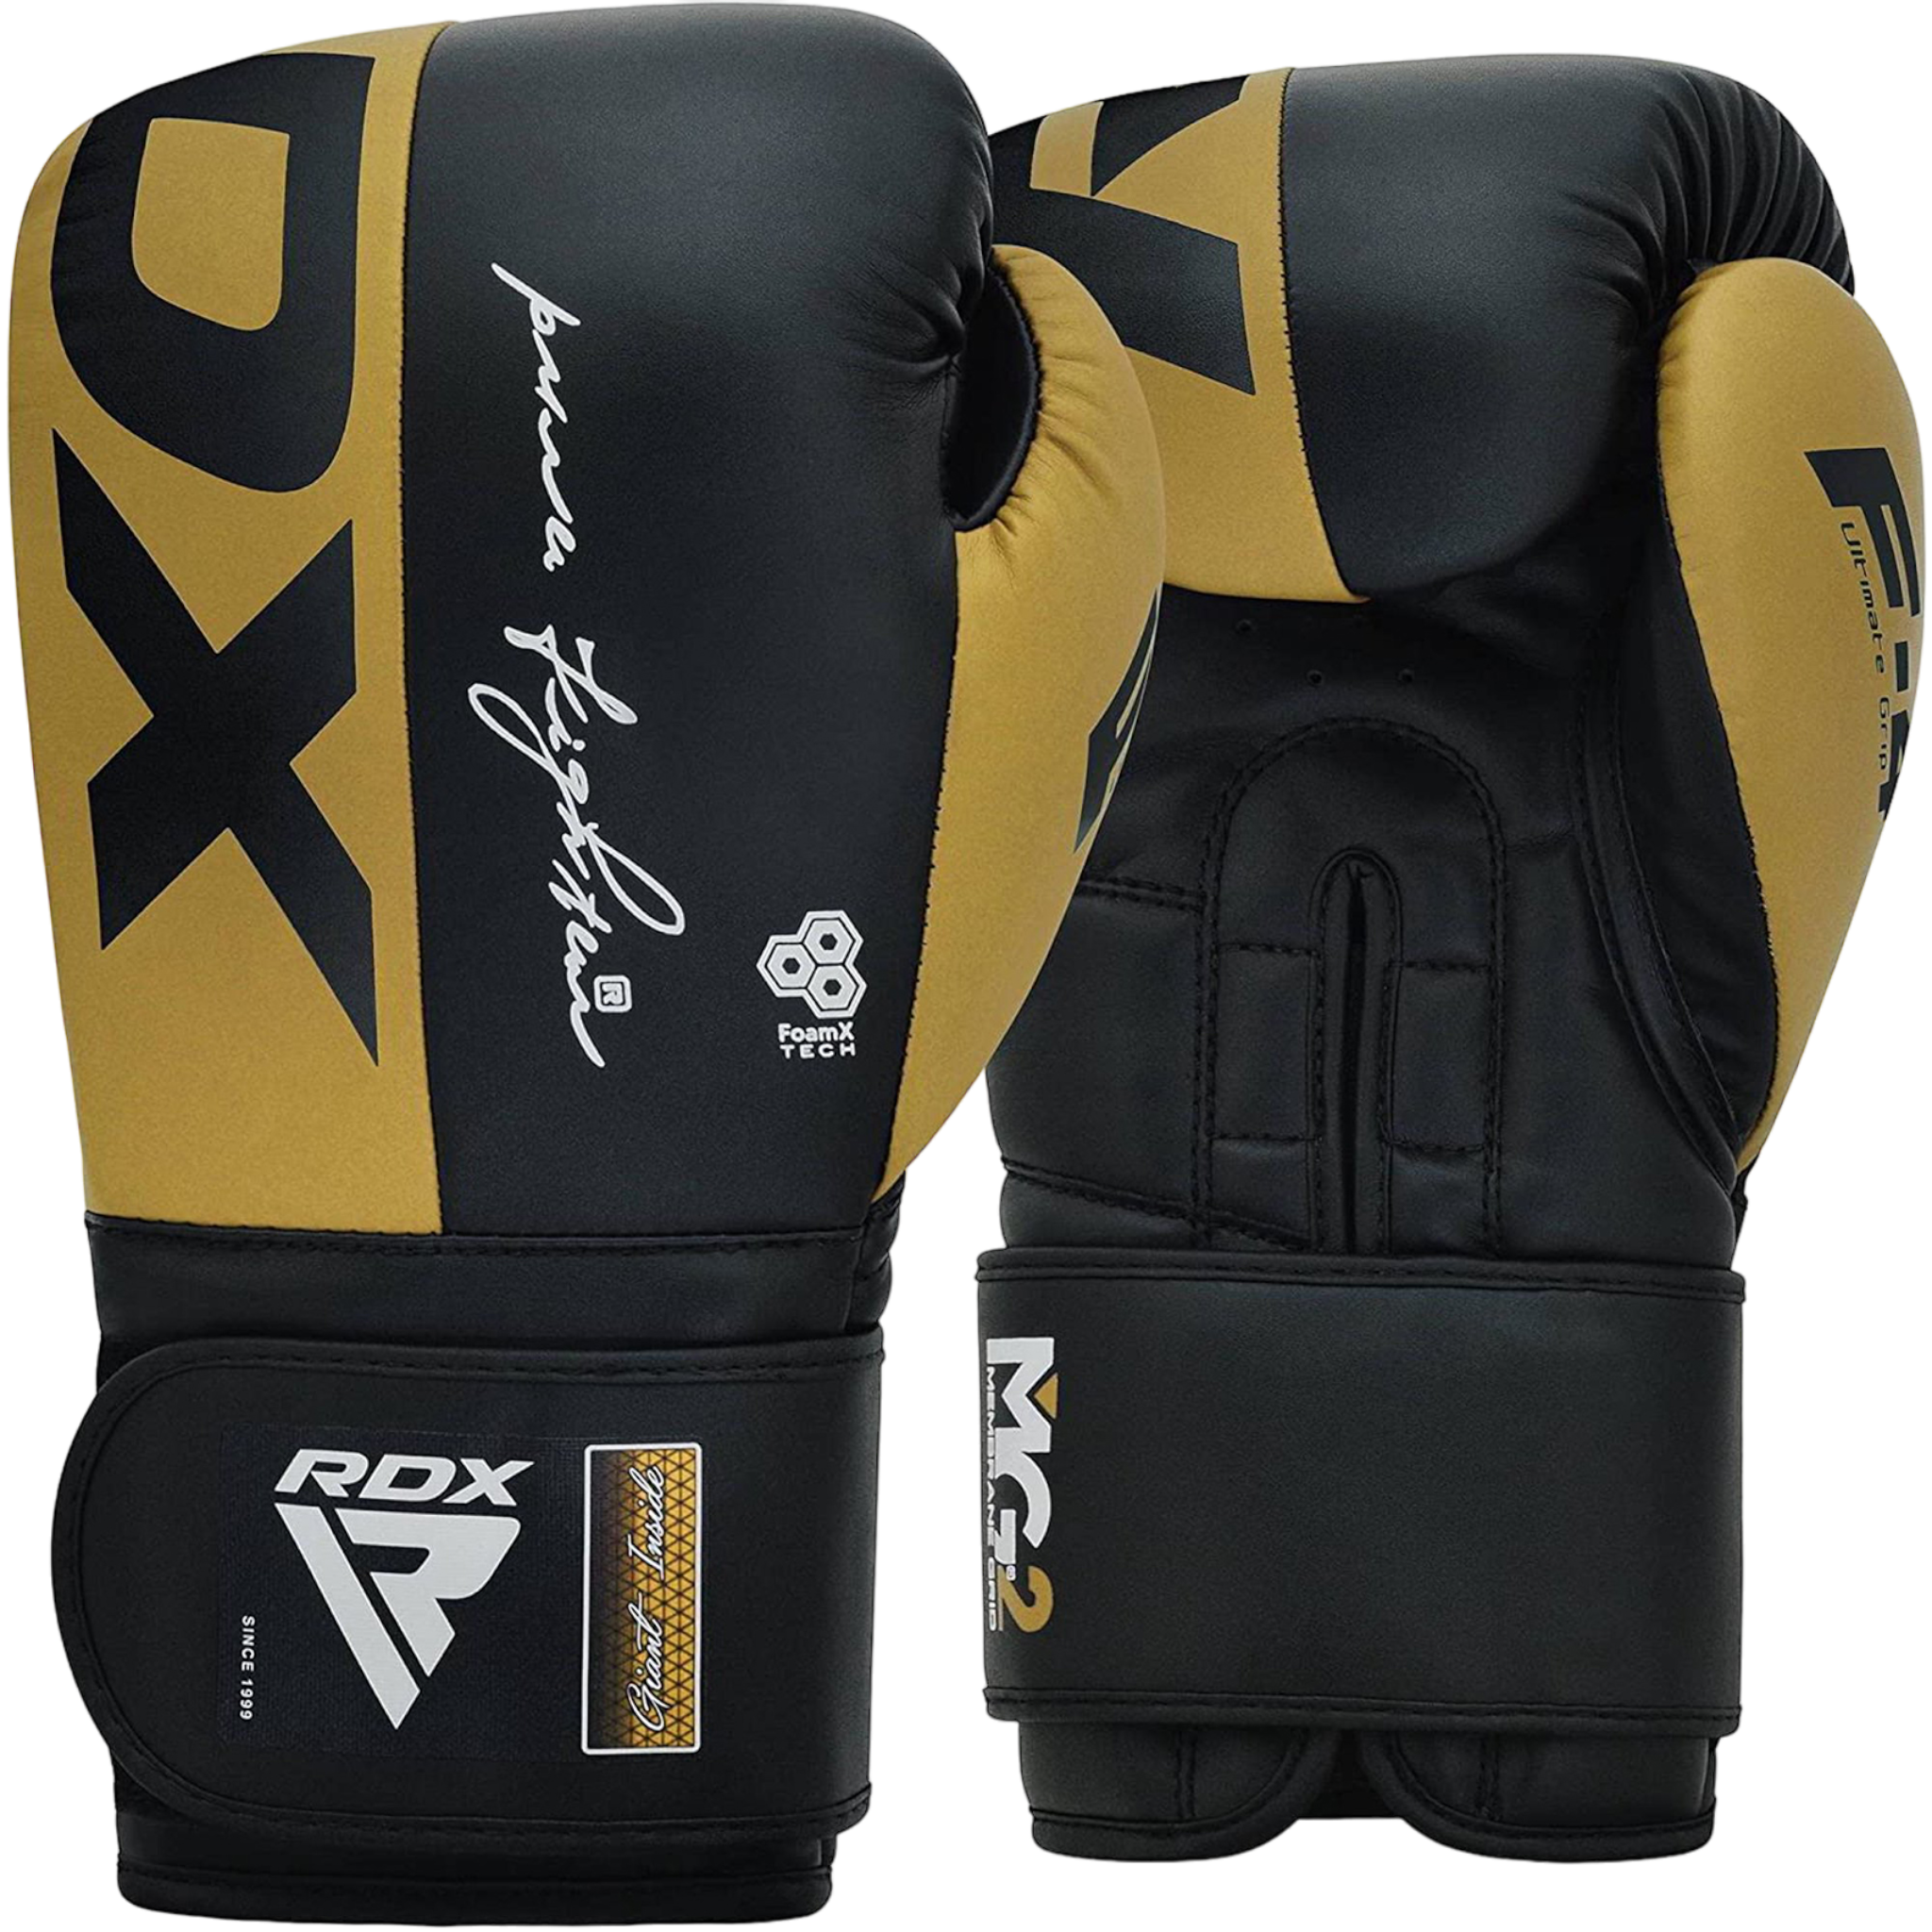 RDX REX F4 MMA, BJJ, Muay Thai, Kickboxing, Training Boxing Gloves - GOLDEN/BLACK - 12oz - Pro-Distributing